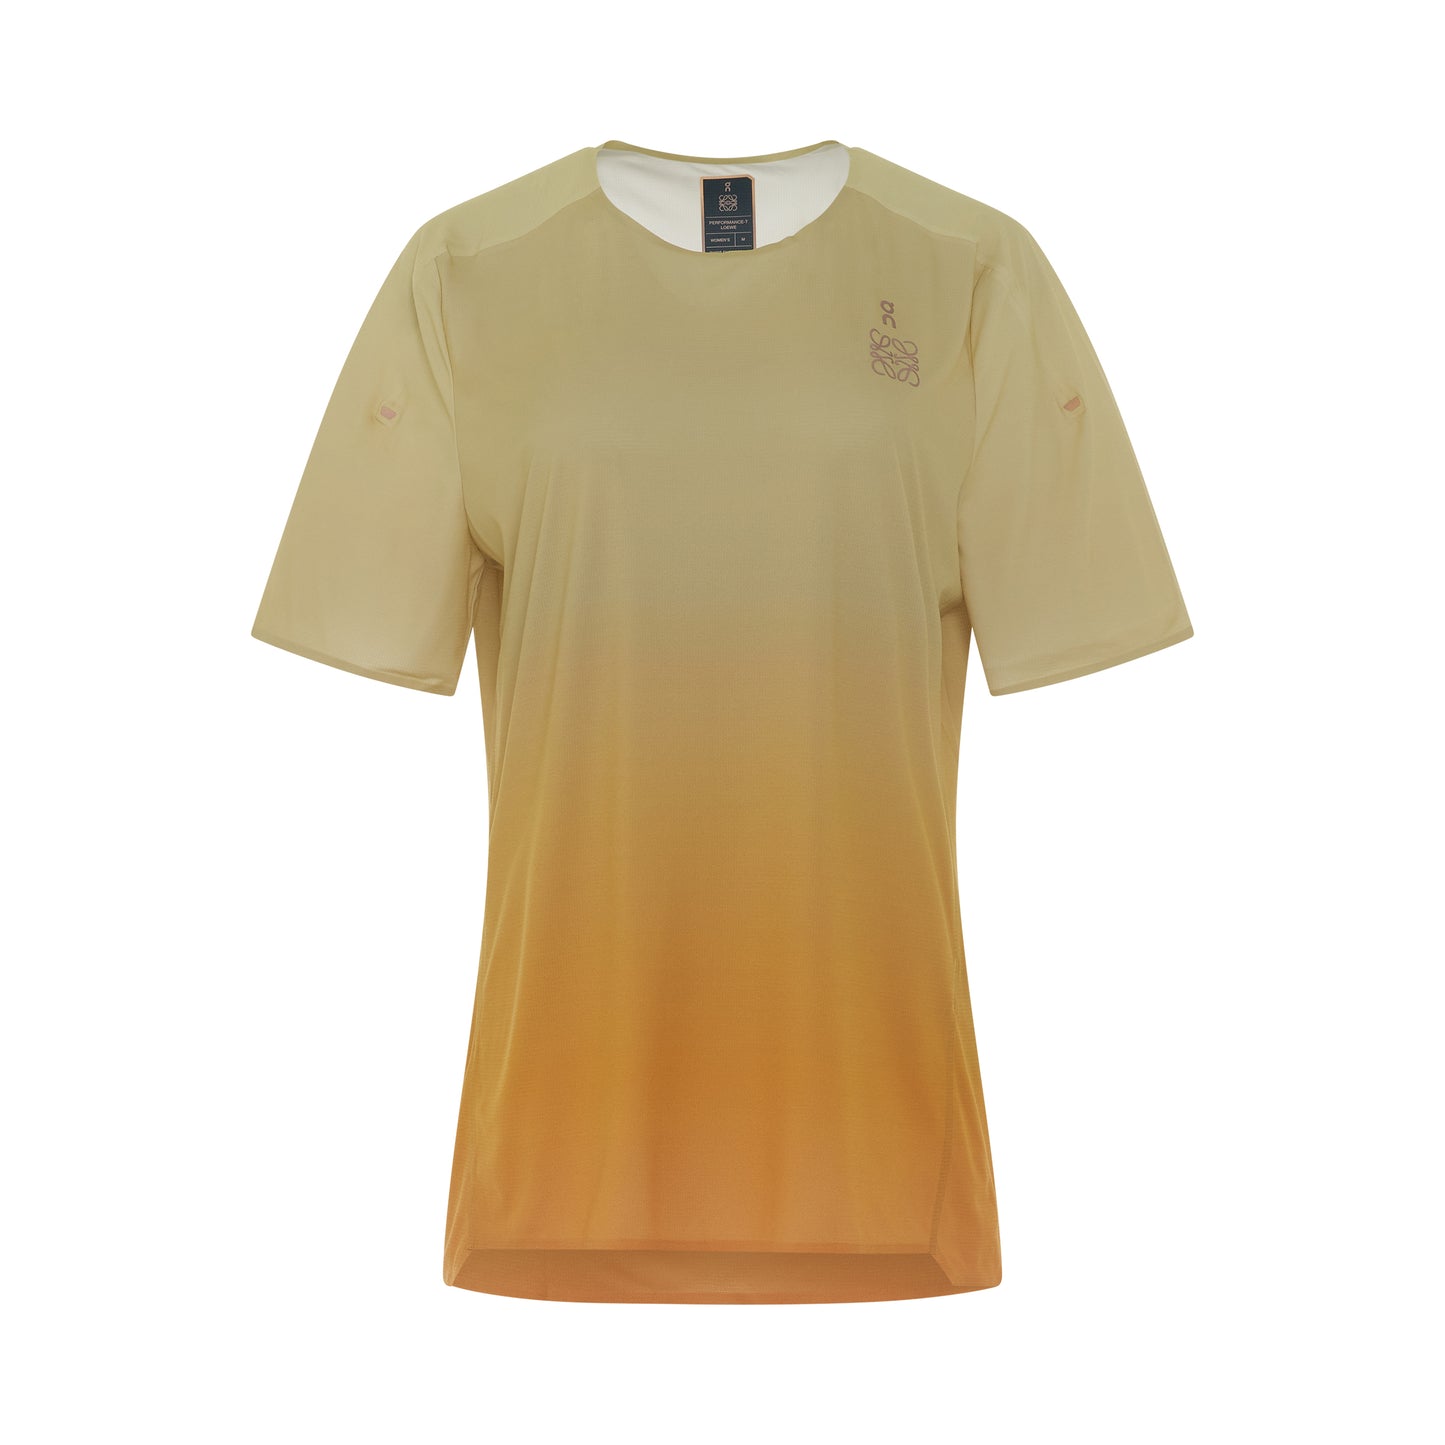 Loewe x ON Performance T-Shirt in Gradient Orange